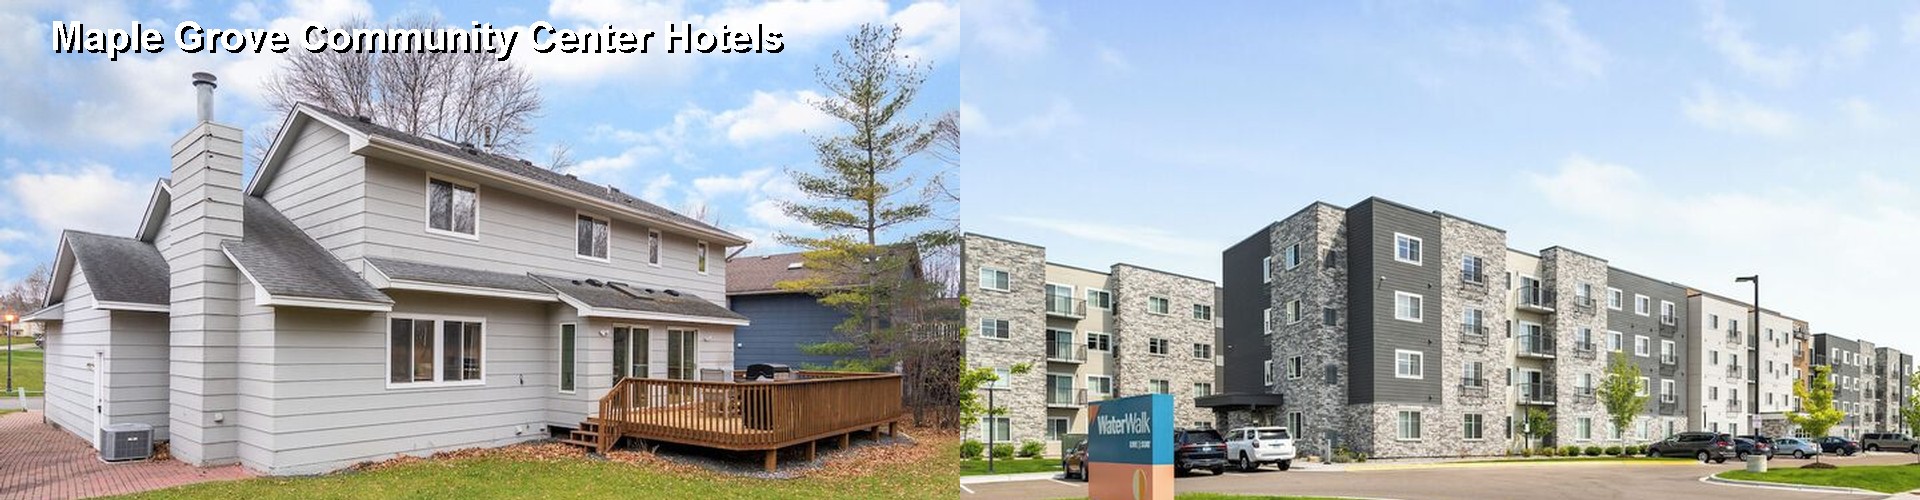 5 Best Hotels near Maple Grove Community Center